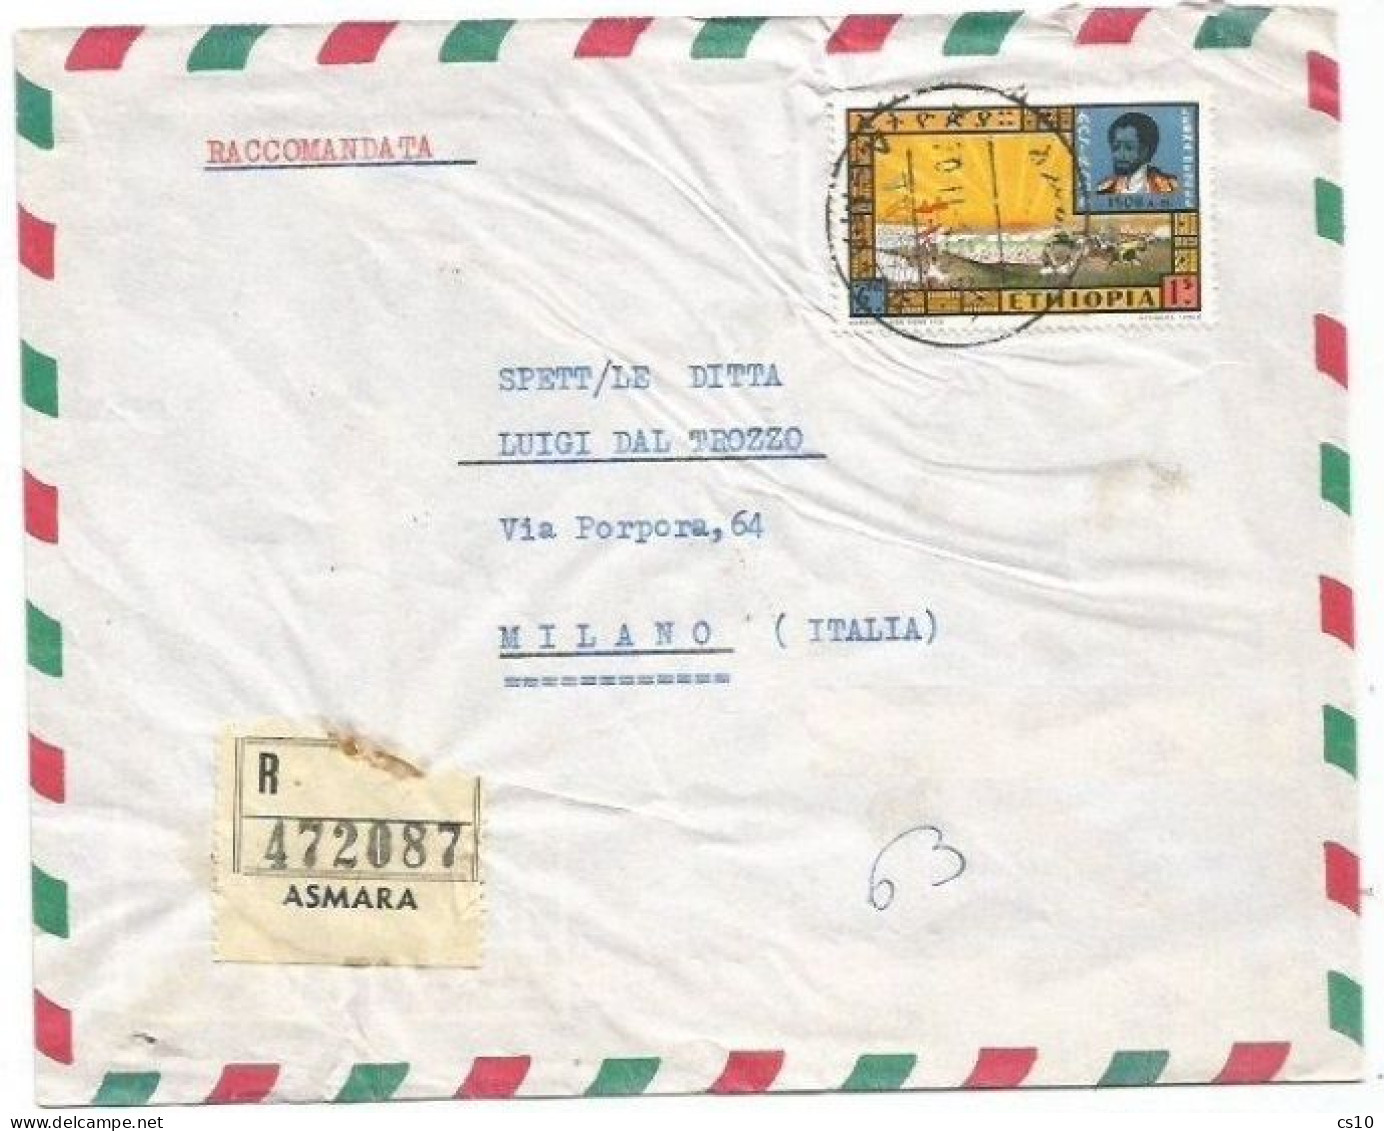 Ethiopia Airmail Registered Commerce Cover Asmara 30nov1966 To Italy With Lebna Dengel  E$ 1 Solo Franking - Äthiopien